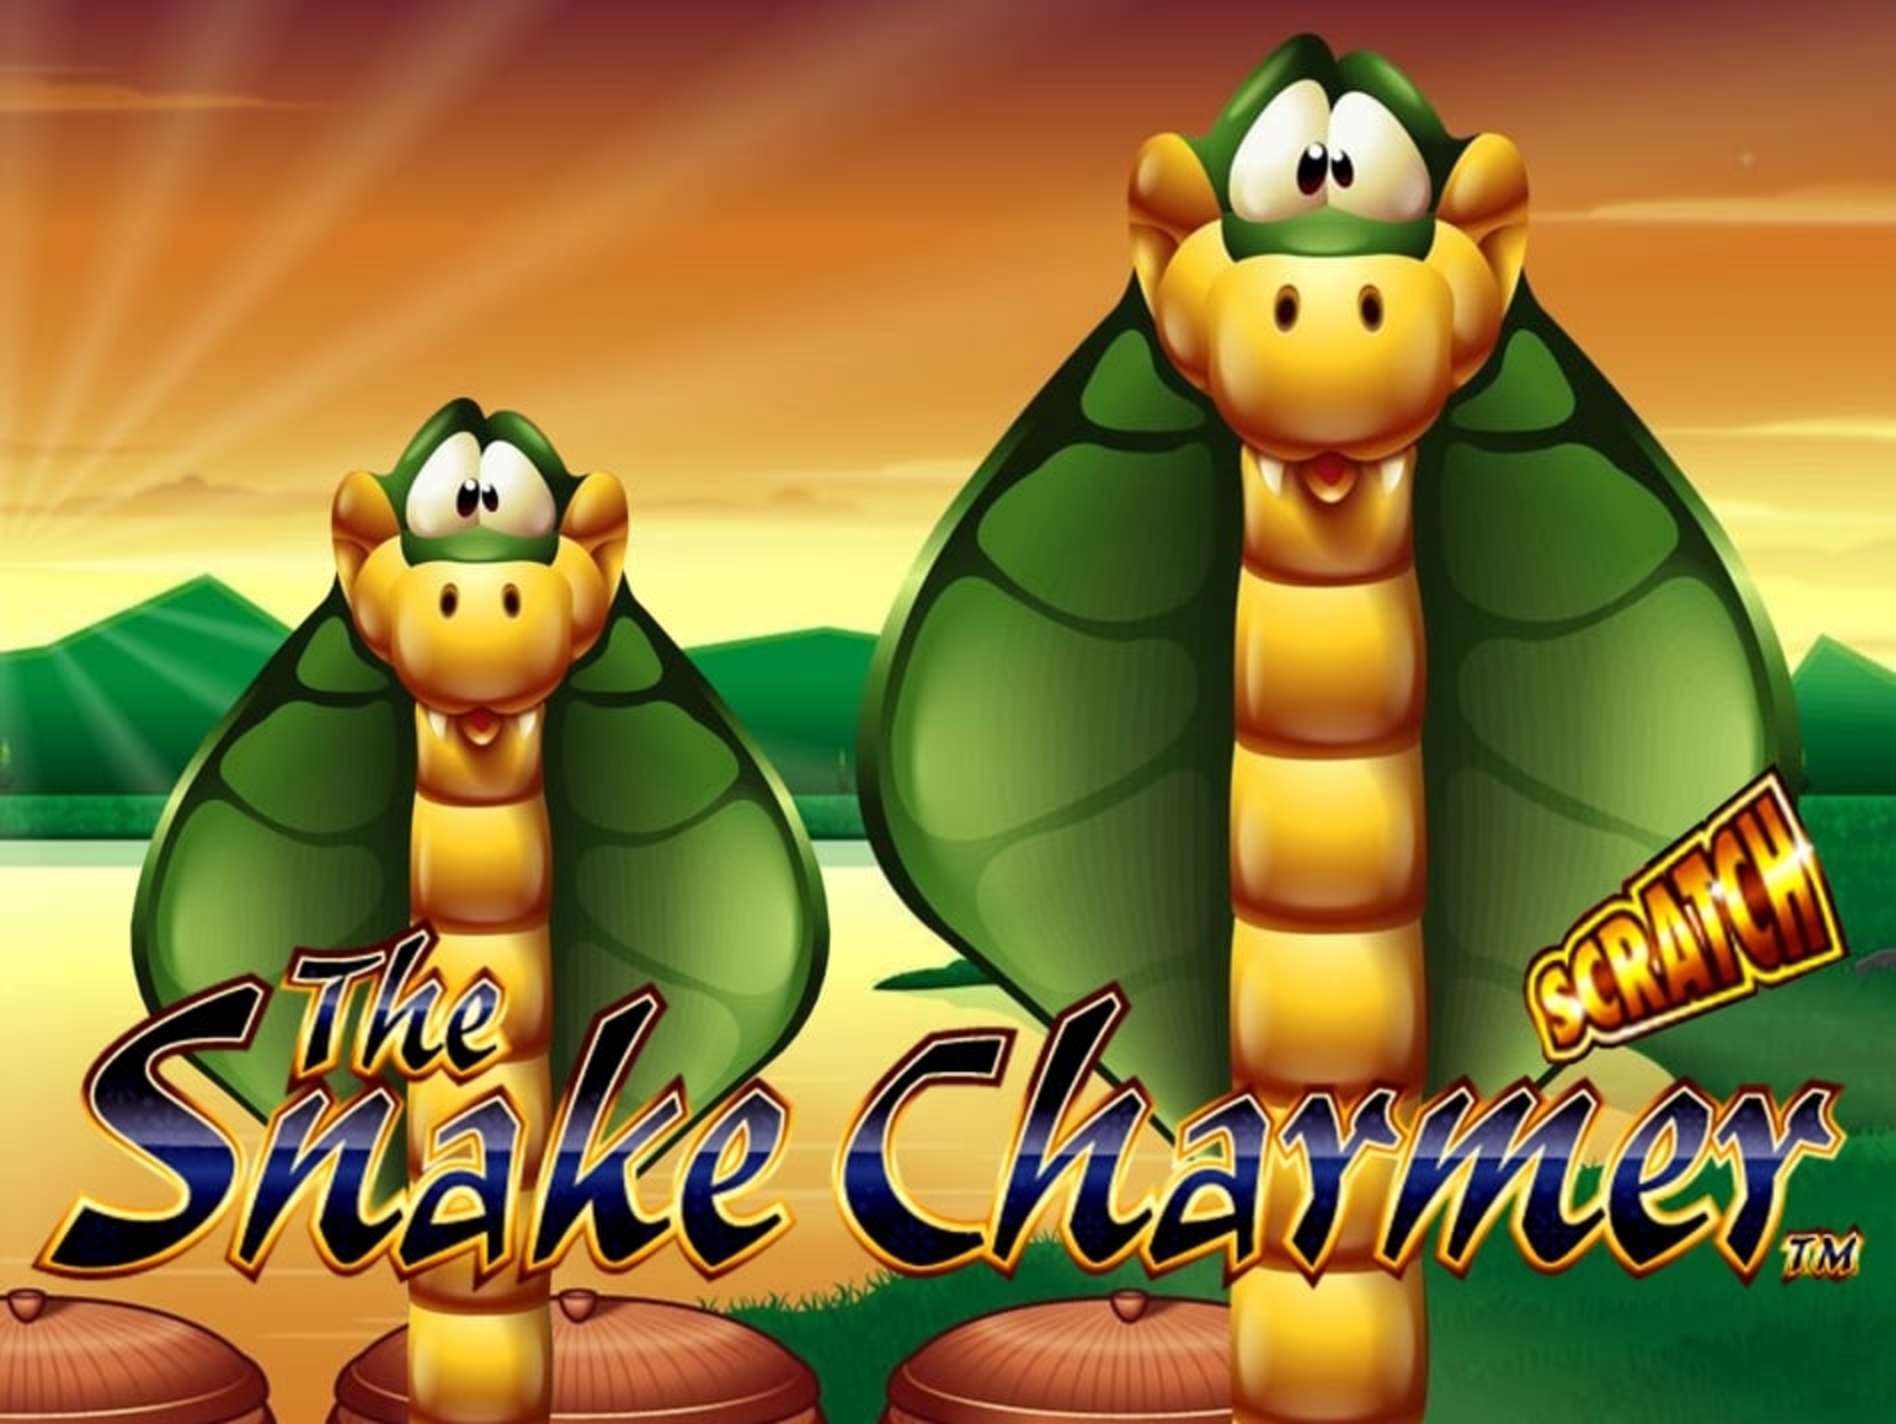 The Snake Charmer demo